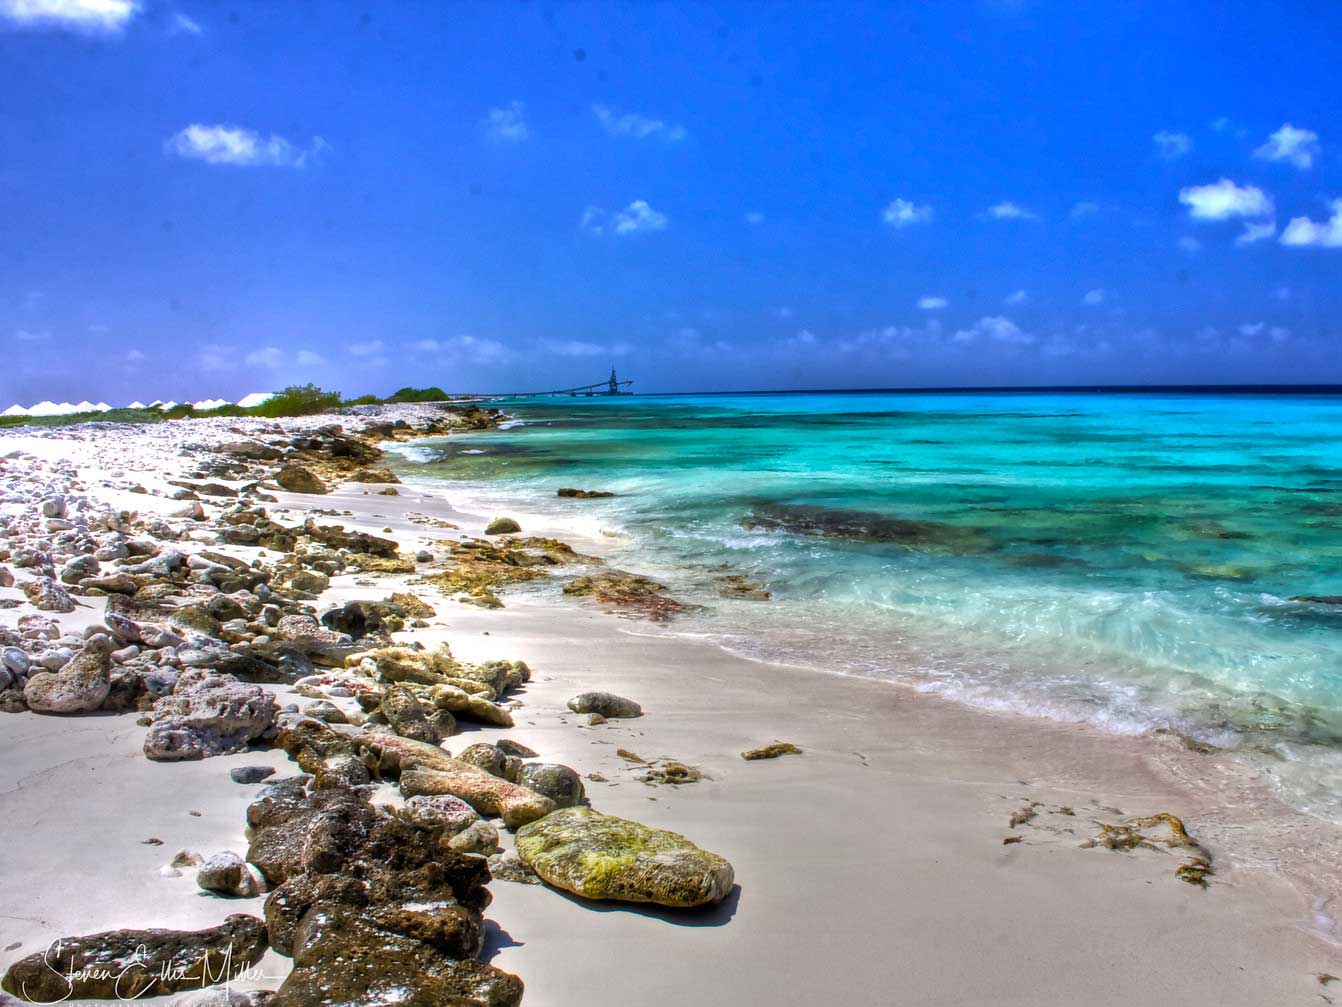 Planning a Shore Diving Trip to Bonaire